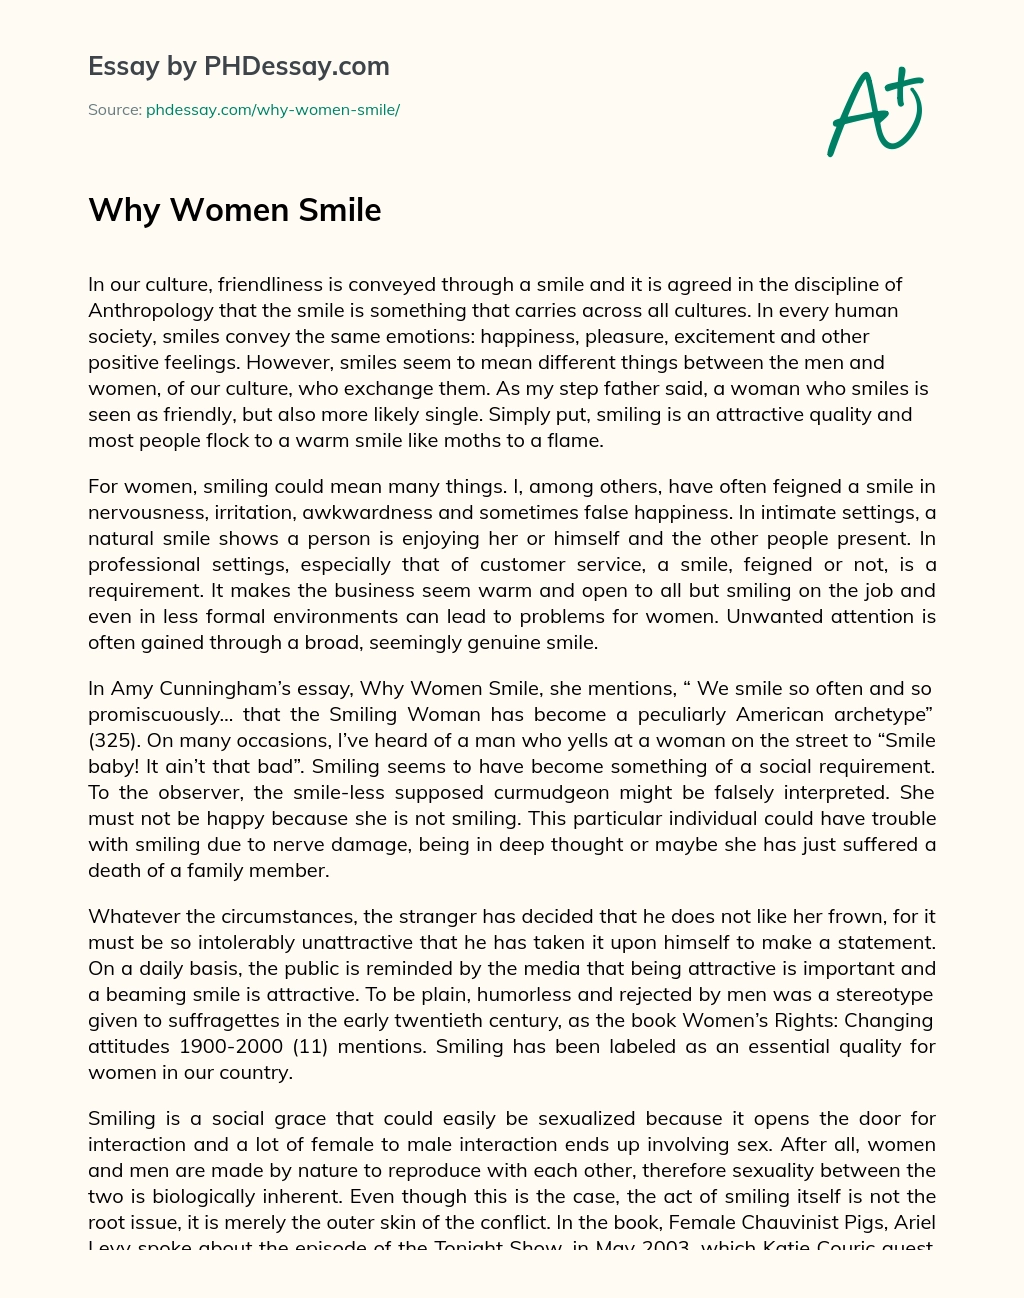 Why Women Smile essay